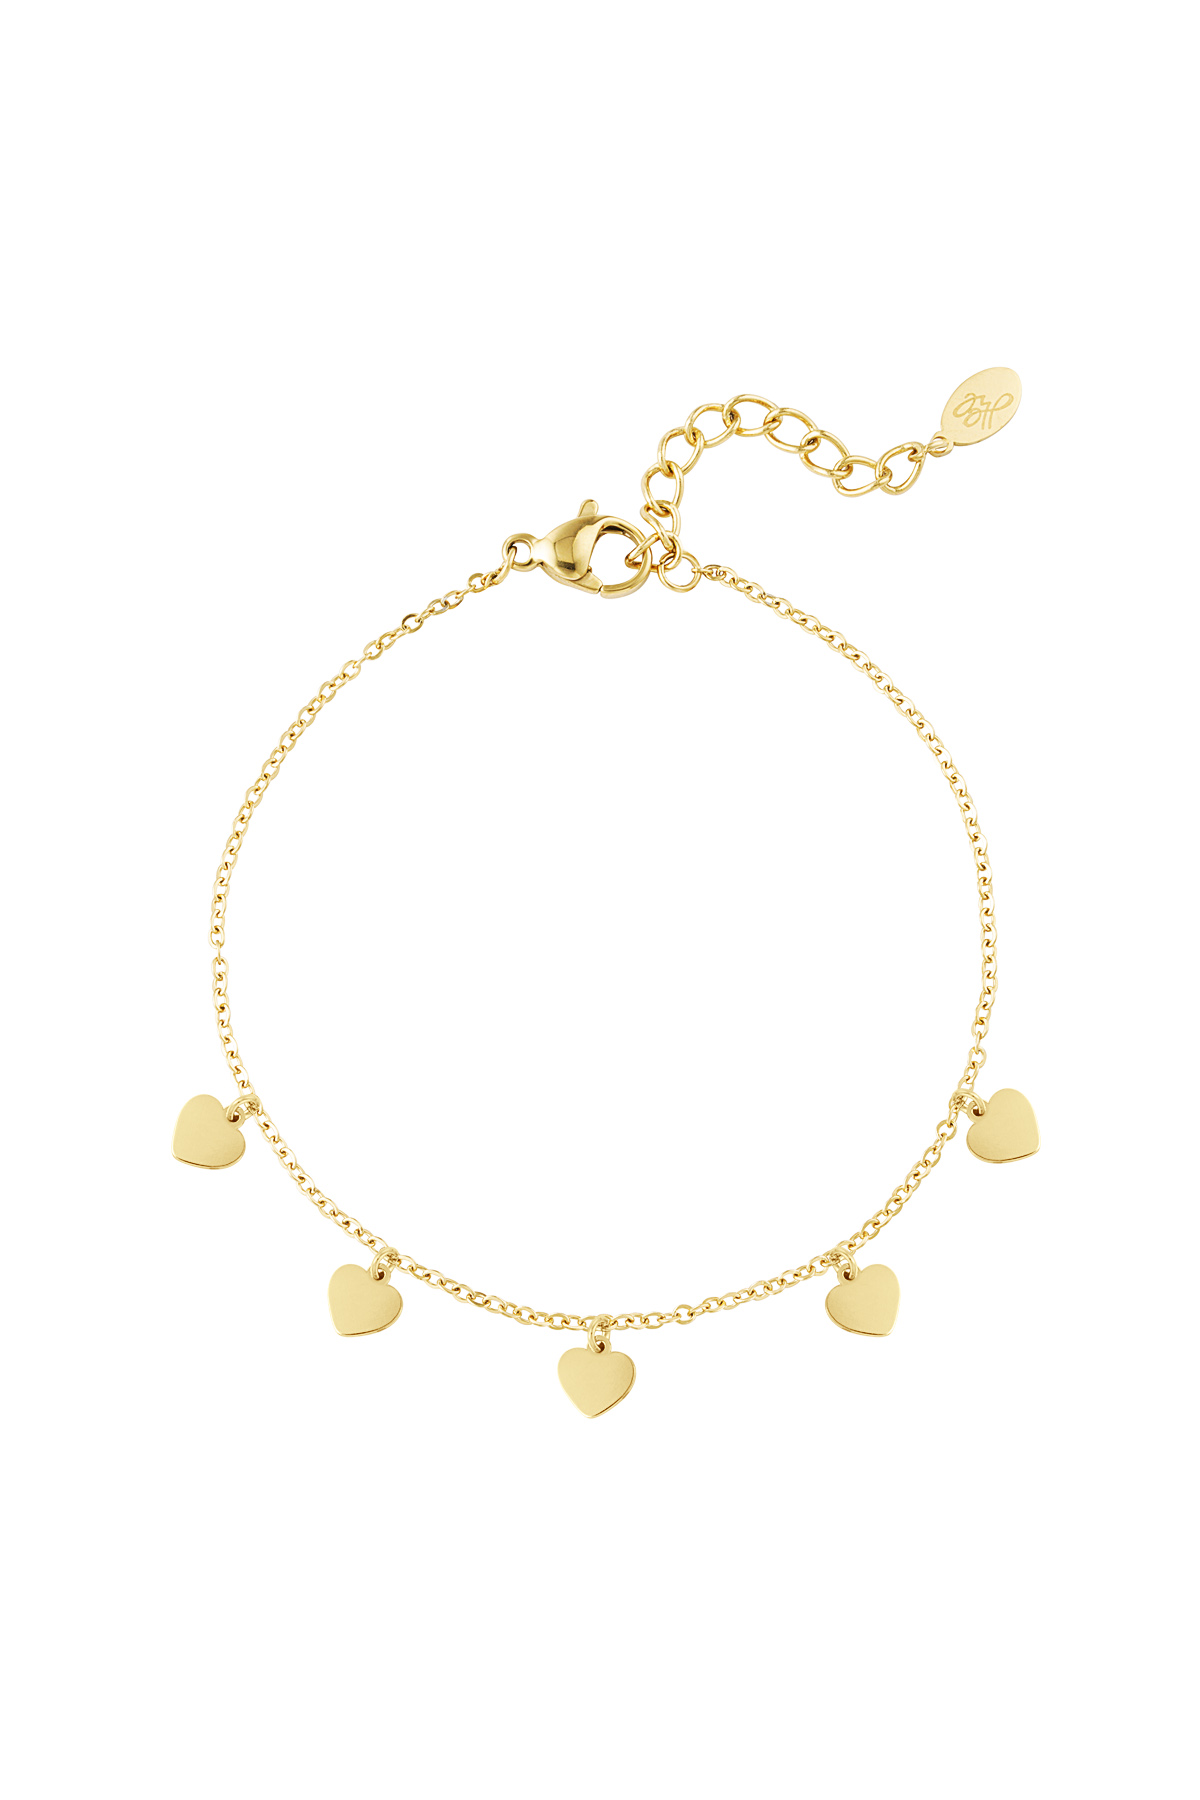 Simple bracelet with heart-shaped pendants - gold